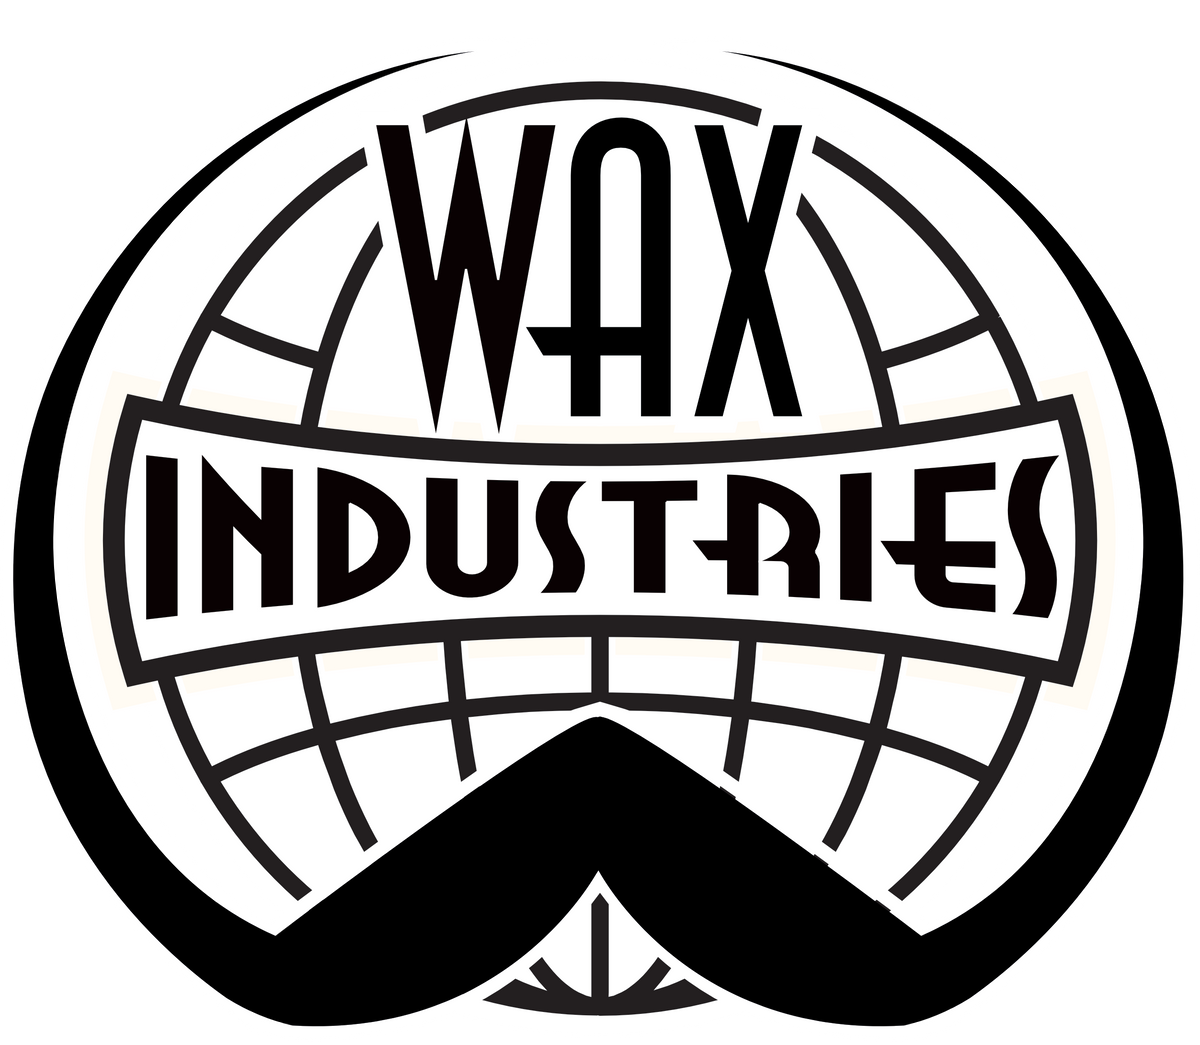 waxindustries.com